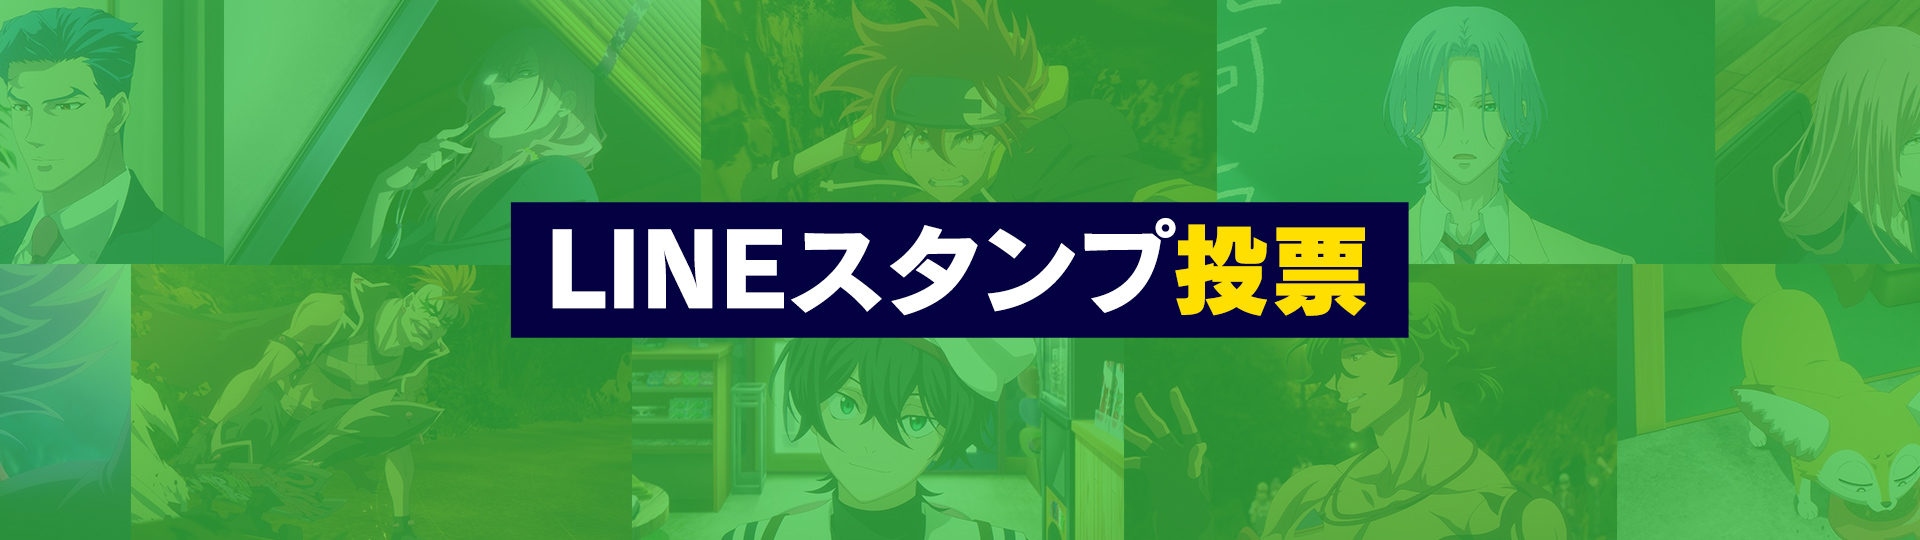 Lineスタンプ投票 Tvアニメ Sk エスケーエイト 公式サイト